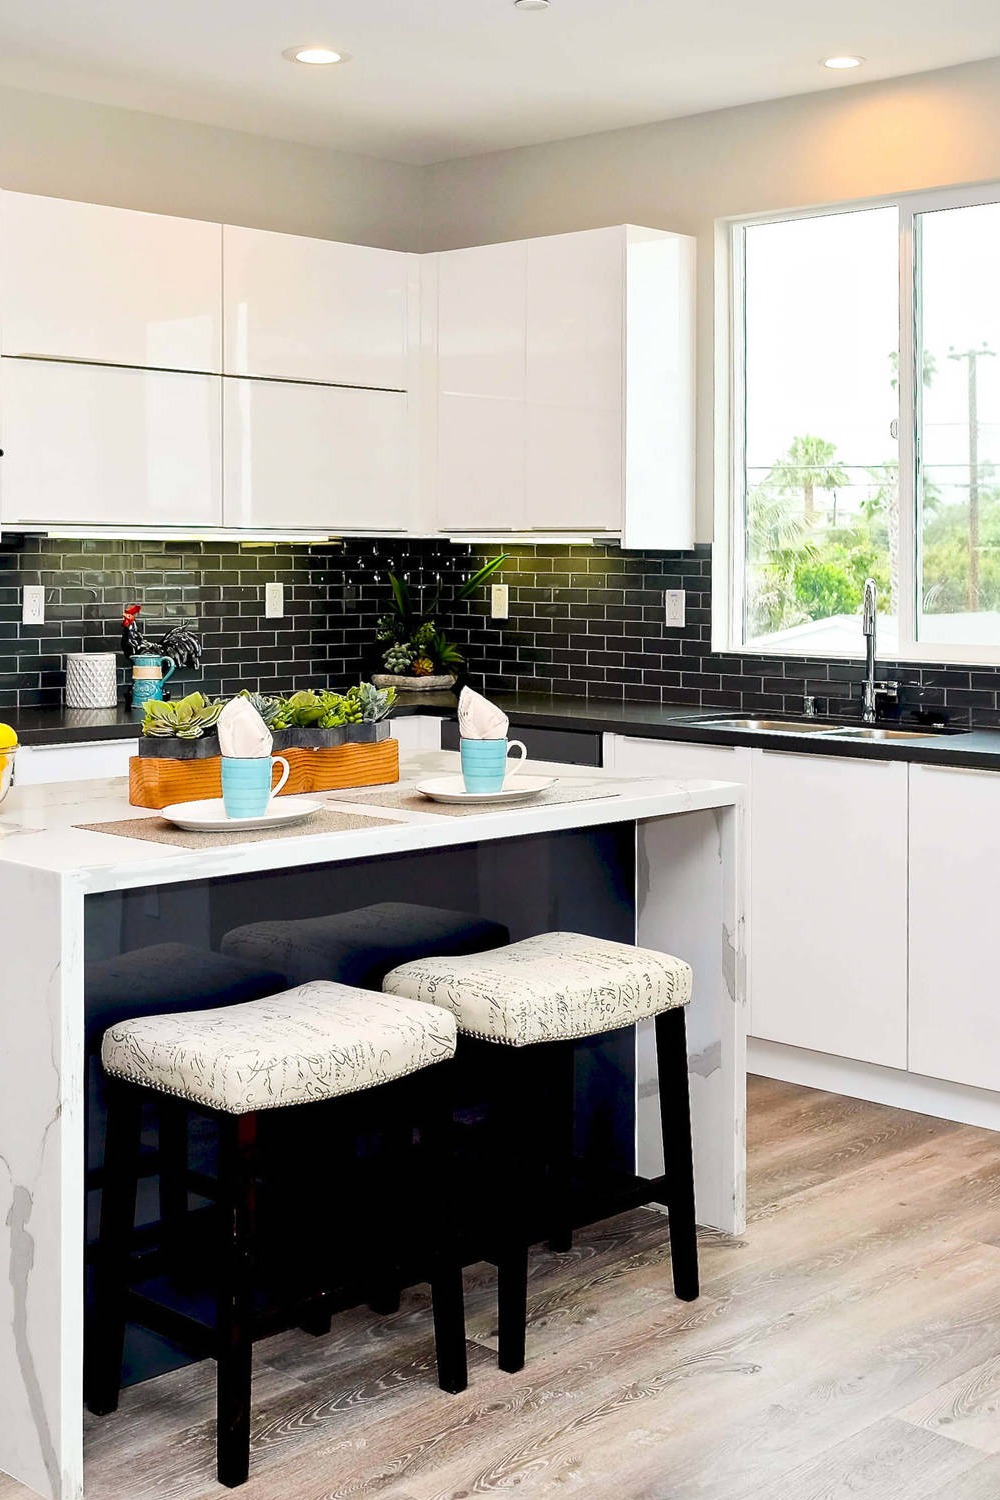 White Cabinets And Black Countertop Eat In Kitchen Island Ceramic Backsplash Granite Countertops White Cabinetry